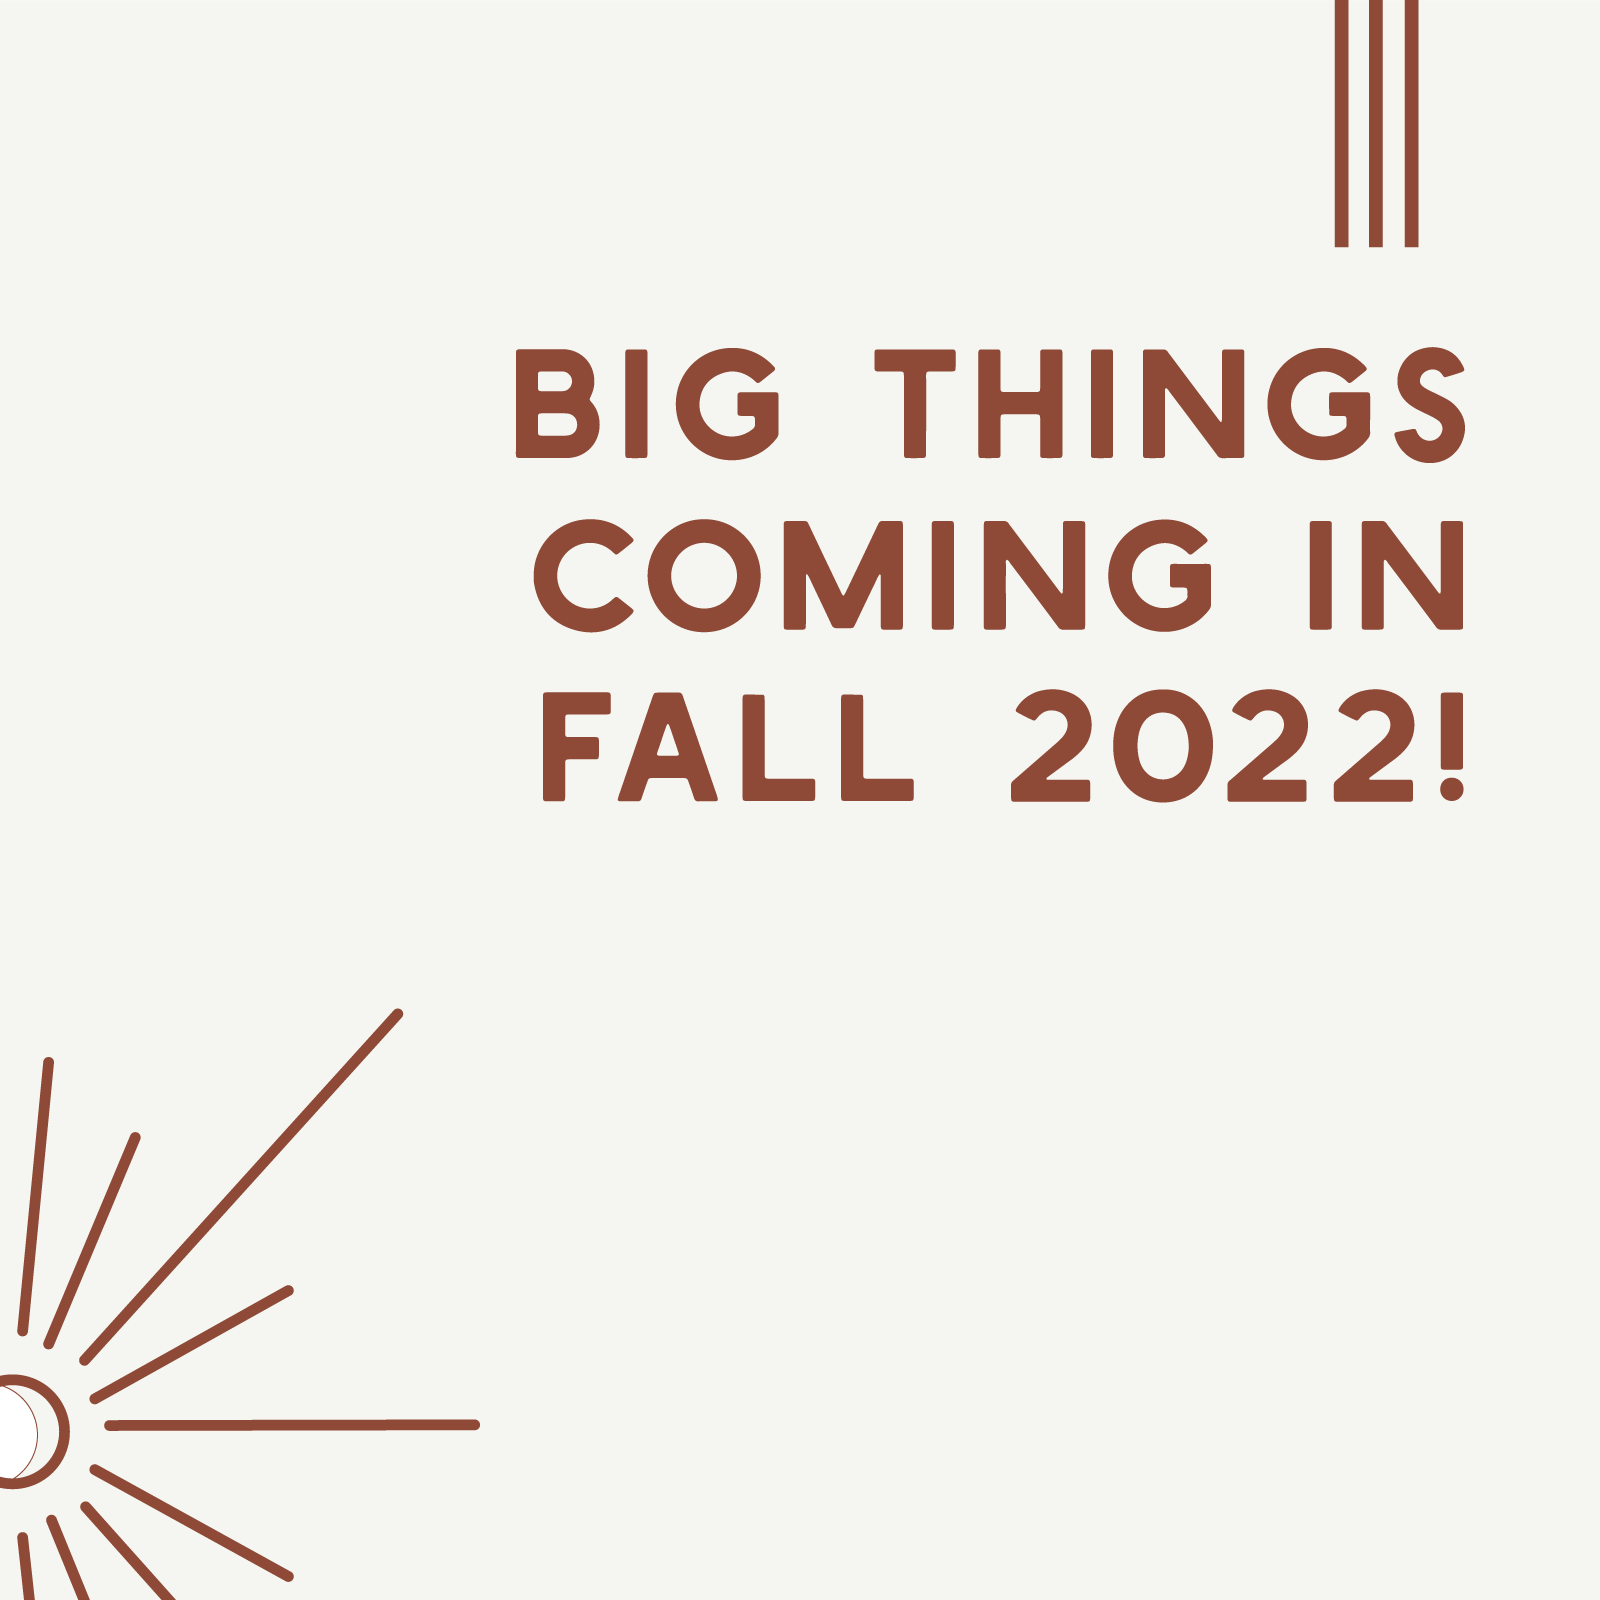 Big Things Coming in Fall 2022!